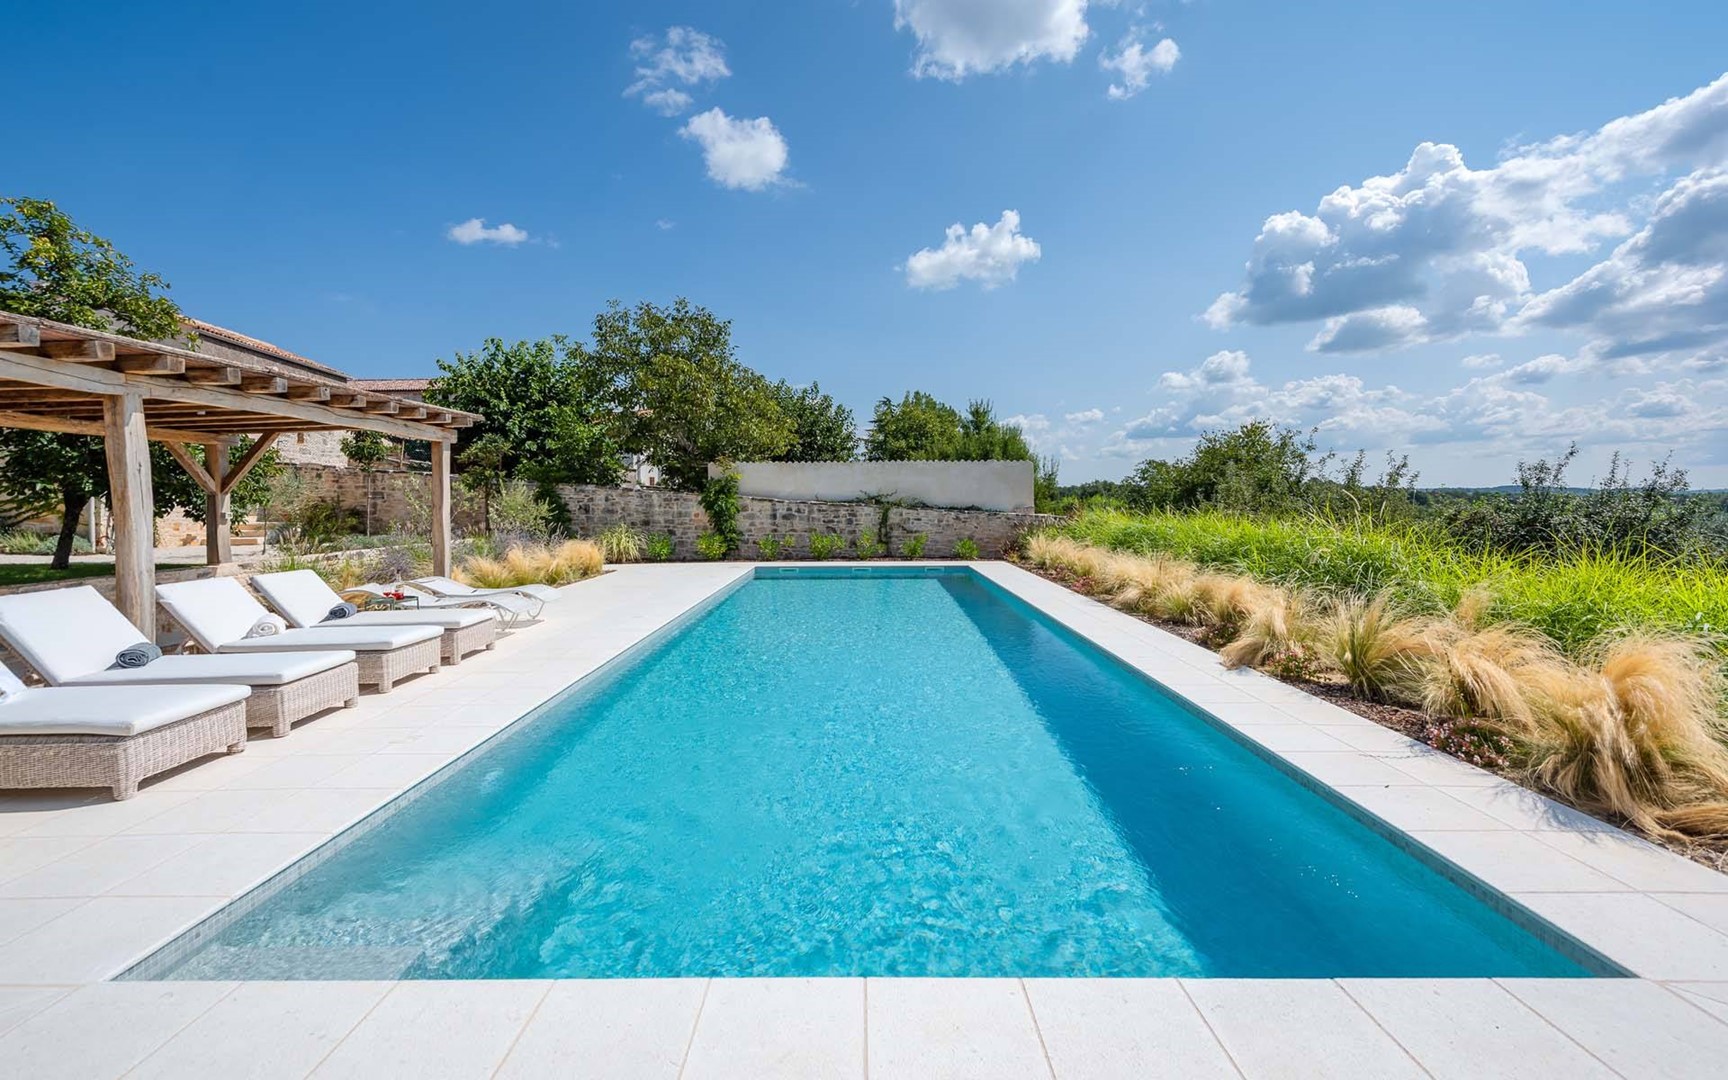 Pogled na bazen okružen  ležaljkama za sunčanje na popločanoj terasi u privatnom vrtu prepunom zelenila ispred luksuzne vile Deluxe Manor Baderna u Istri